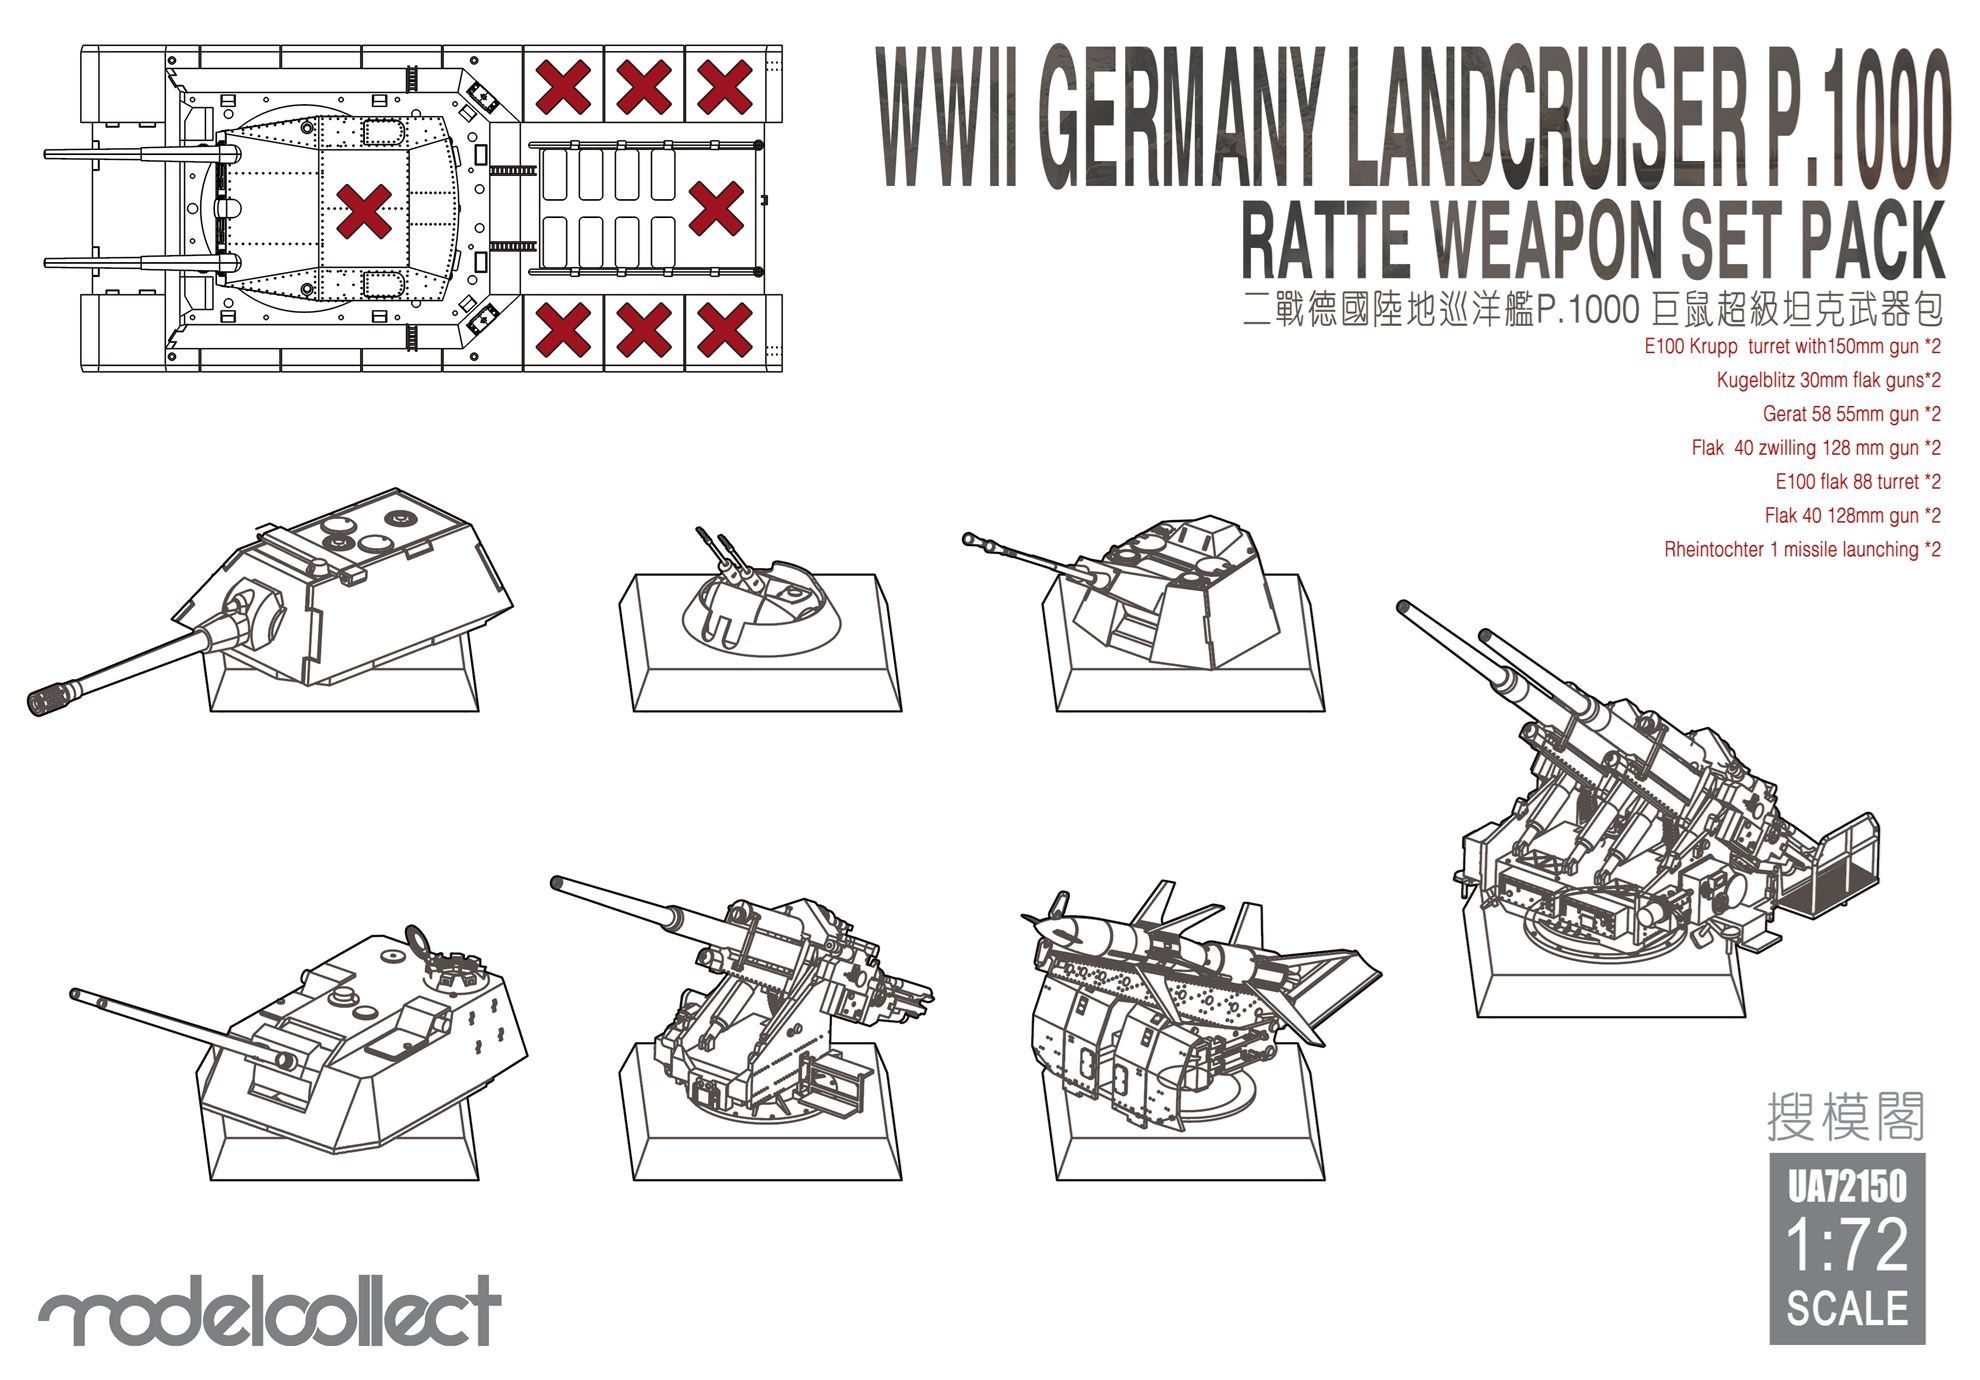 Landcruiser P.1000 Ratte weapon set pack